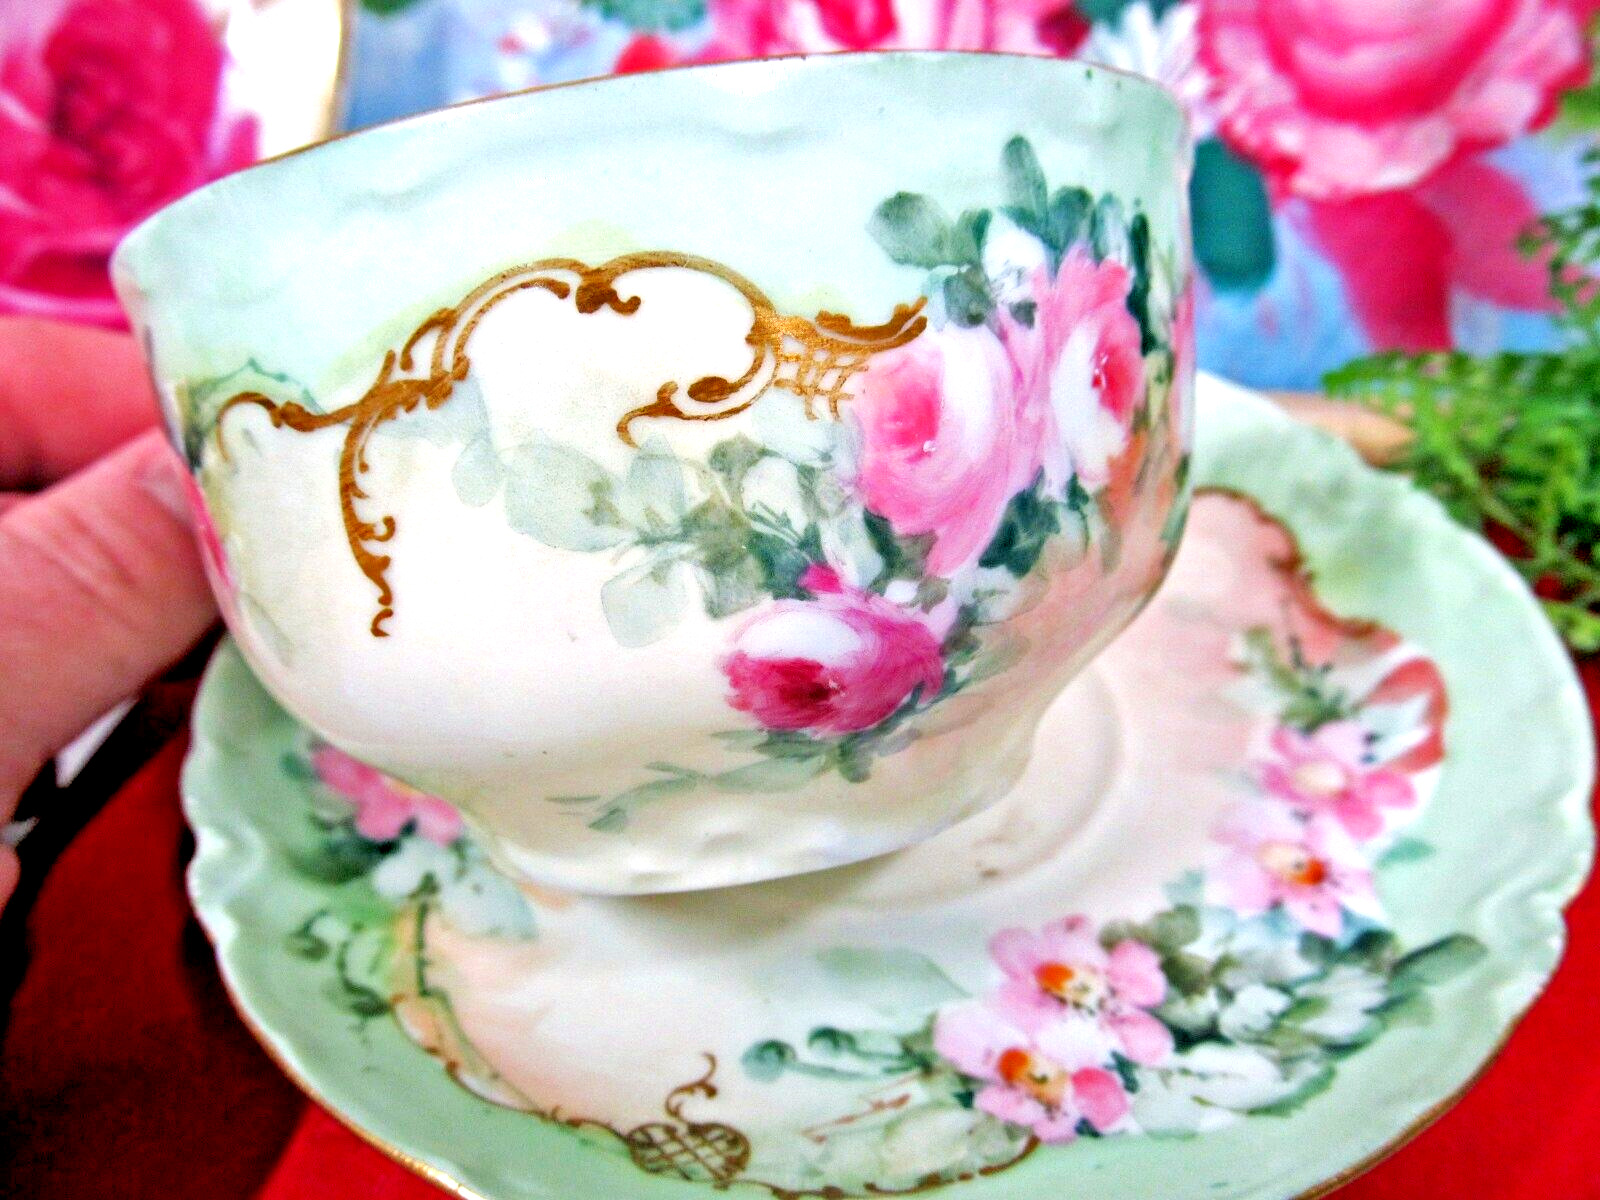 Haviland Limoges Tea cup & saucer painted pink blossom flowers France teacup